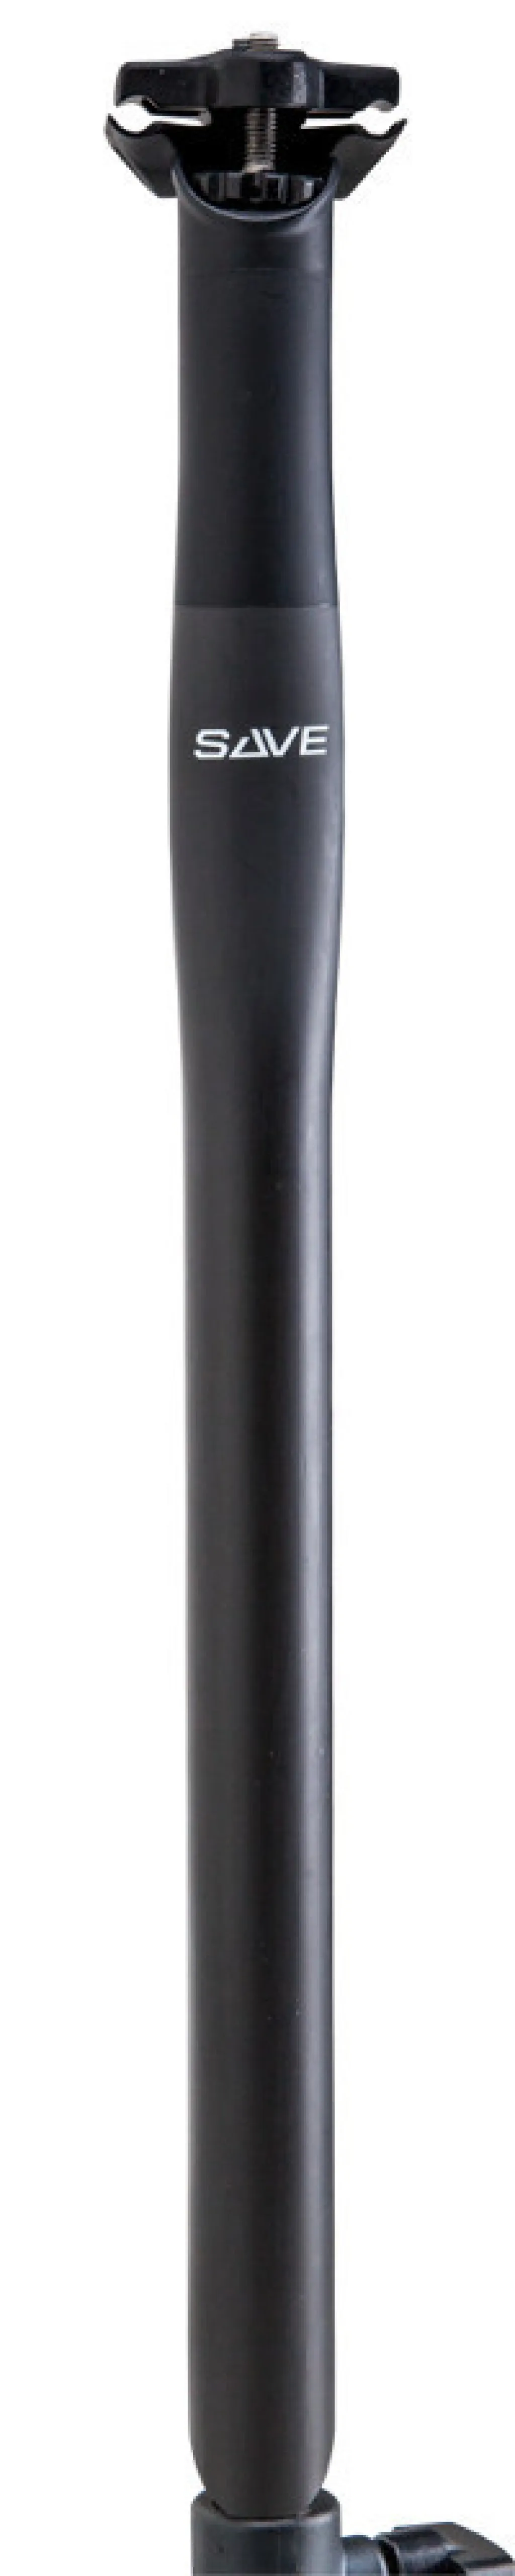 Подседельная труба Сannondale S.A.V.E. 27.2x420мм карбон, 2 болта, Logo белый